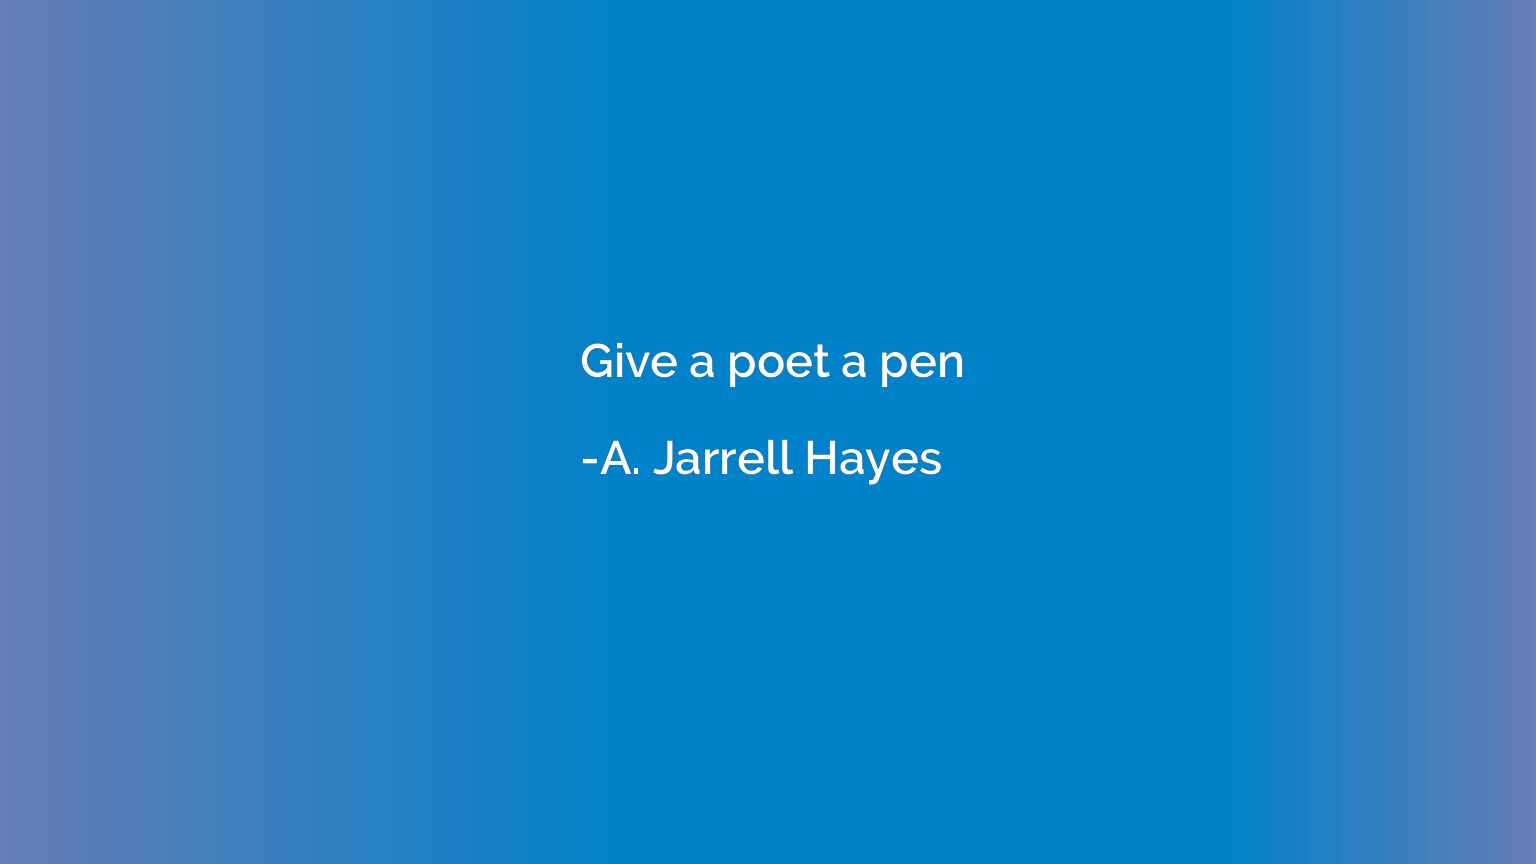 Give a poet a pen